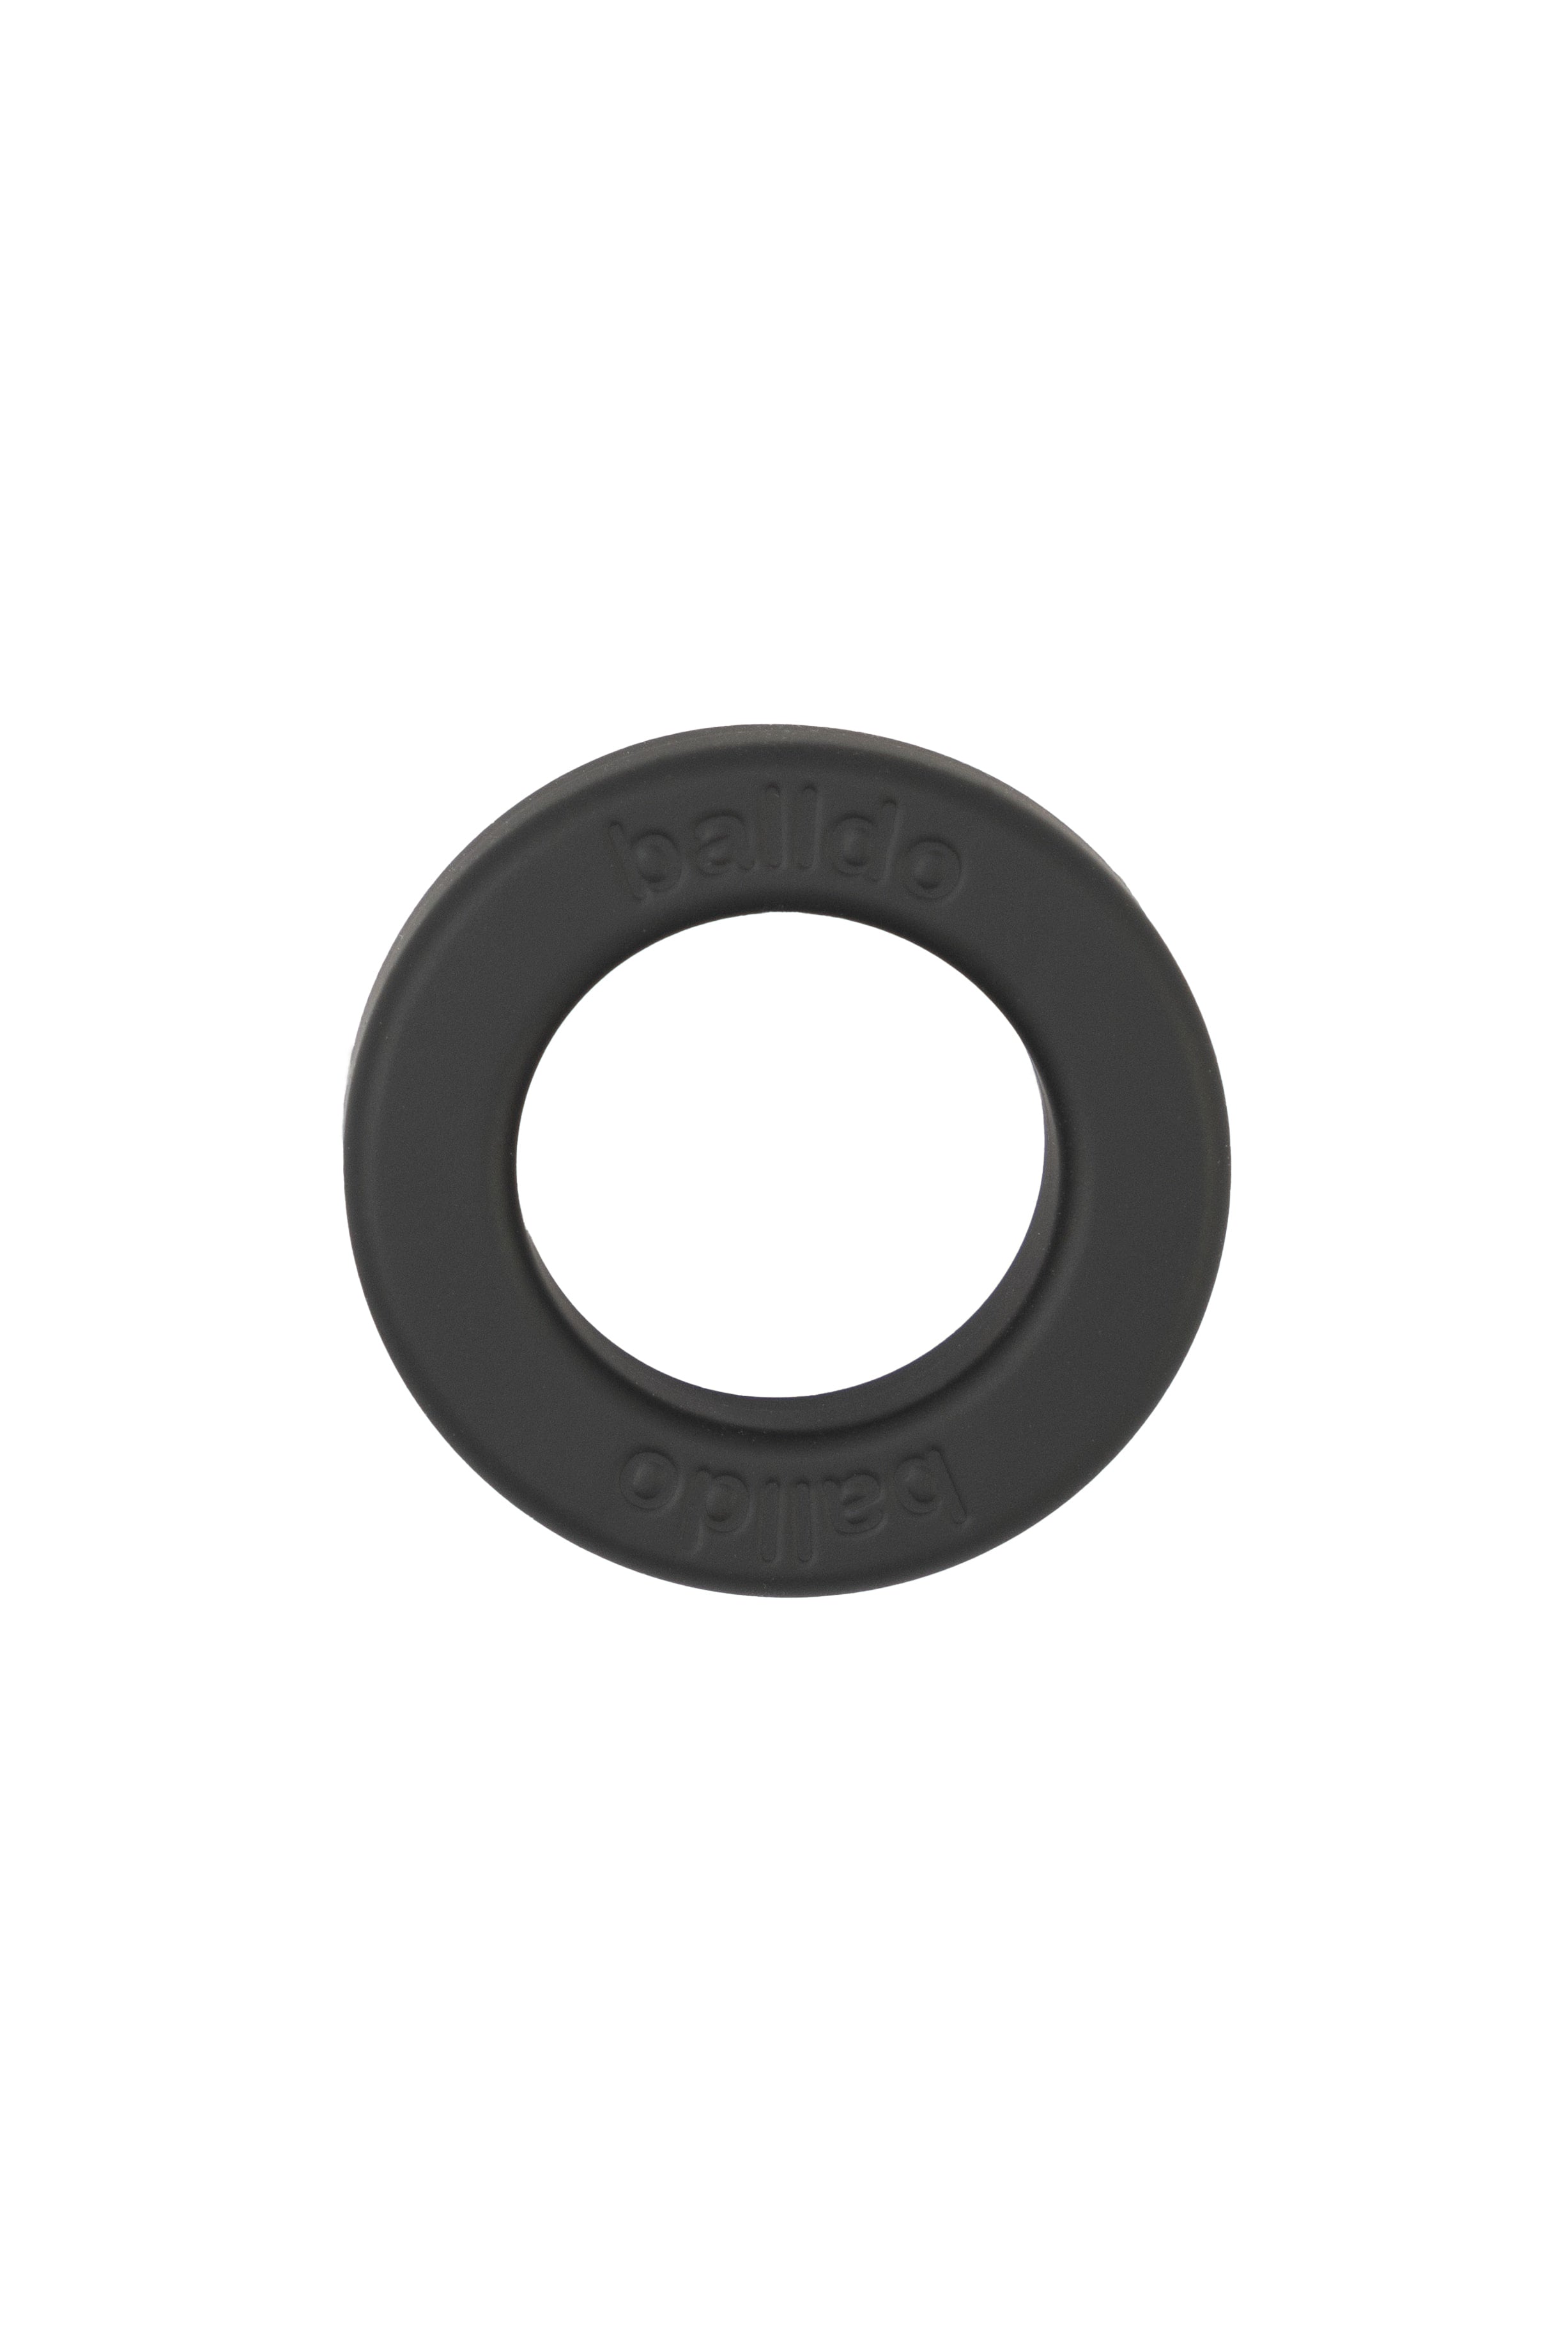 Single Spacer Ring Black